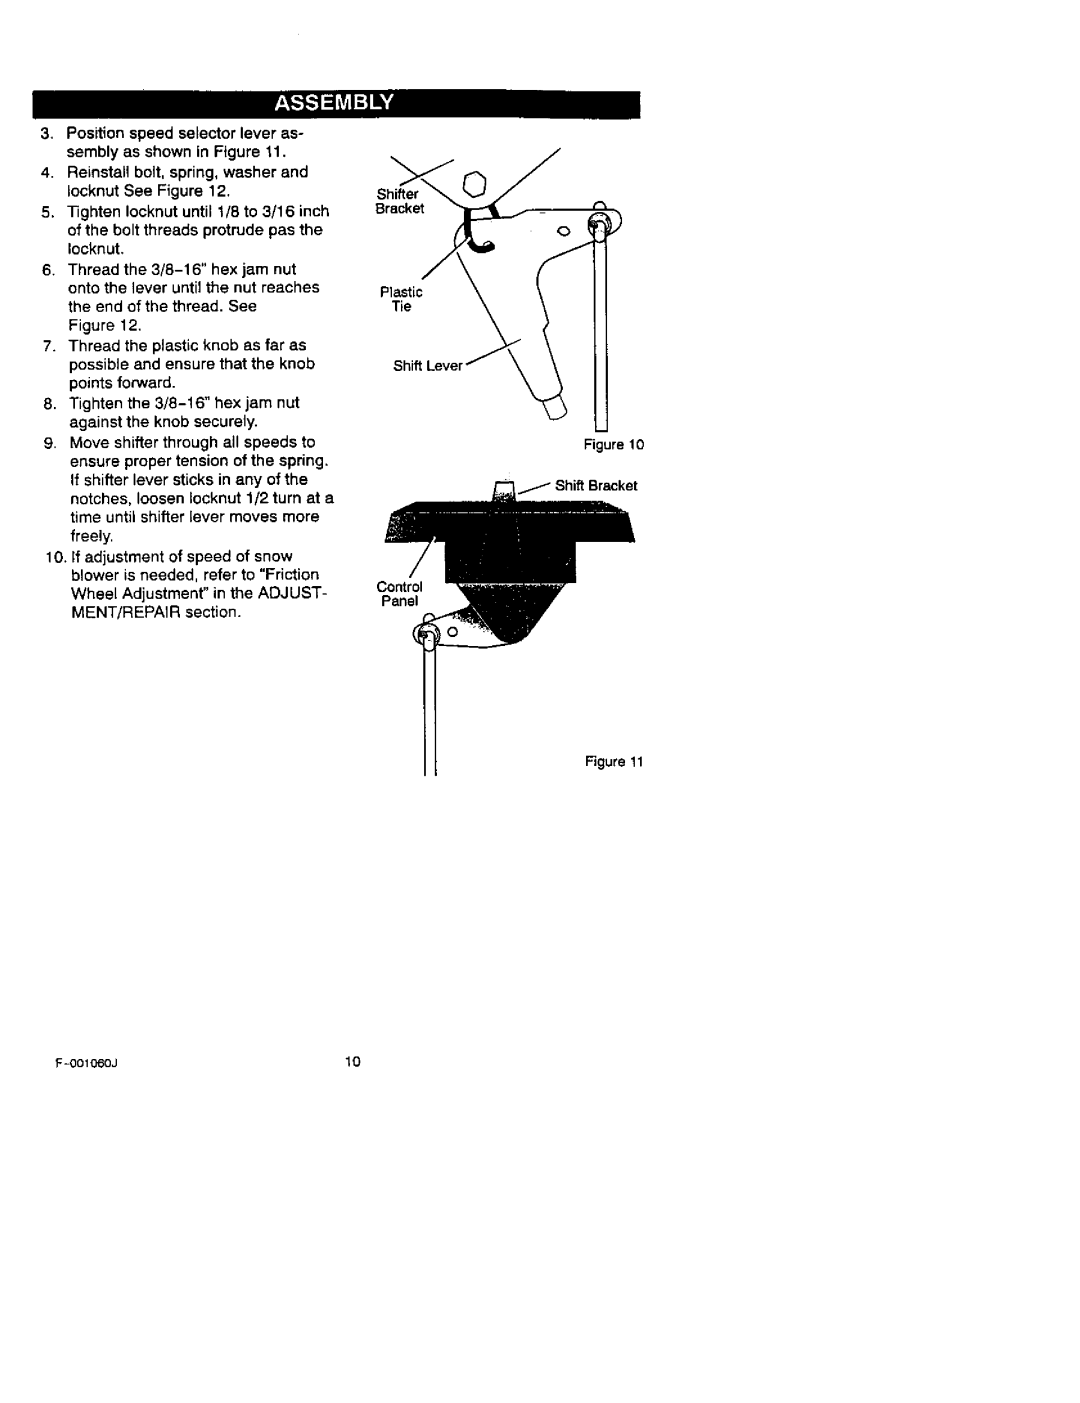 Craftsman 536.88113 operating instructions Positionspeedselectorlever as, Plastic Tie Control Panel 